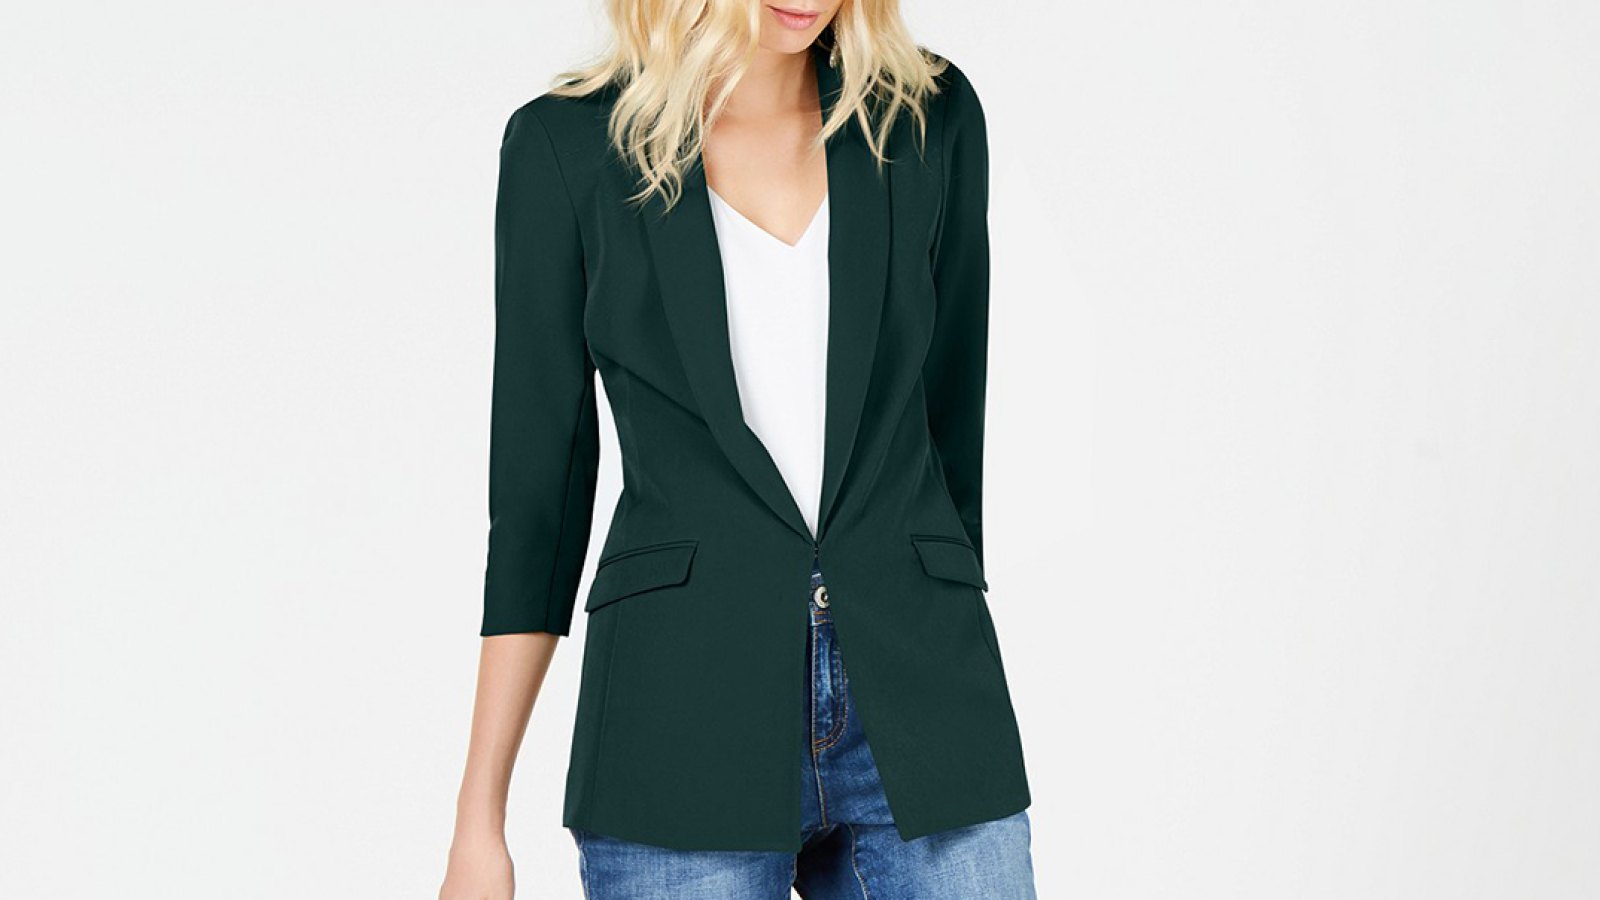 Macys-Emerald-Green-Blazer